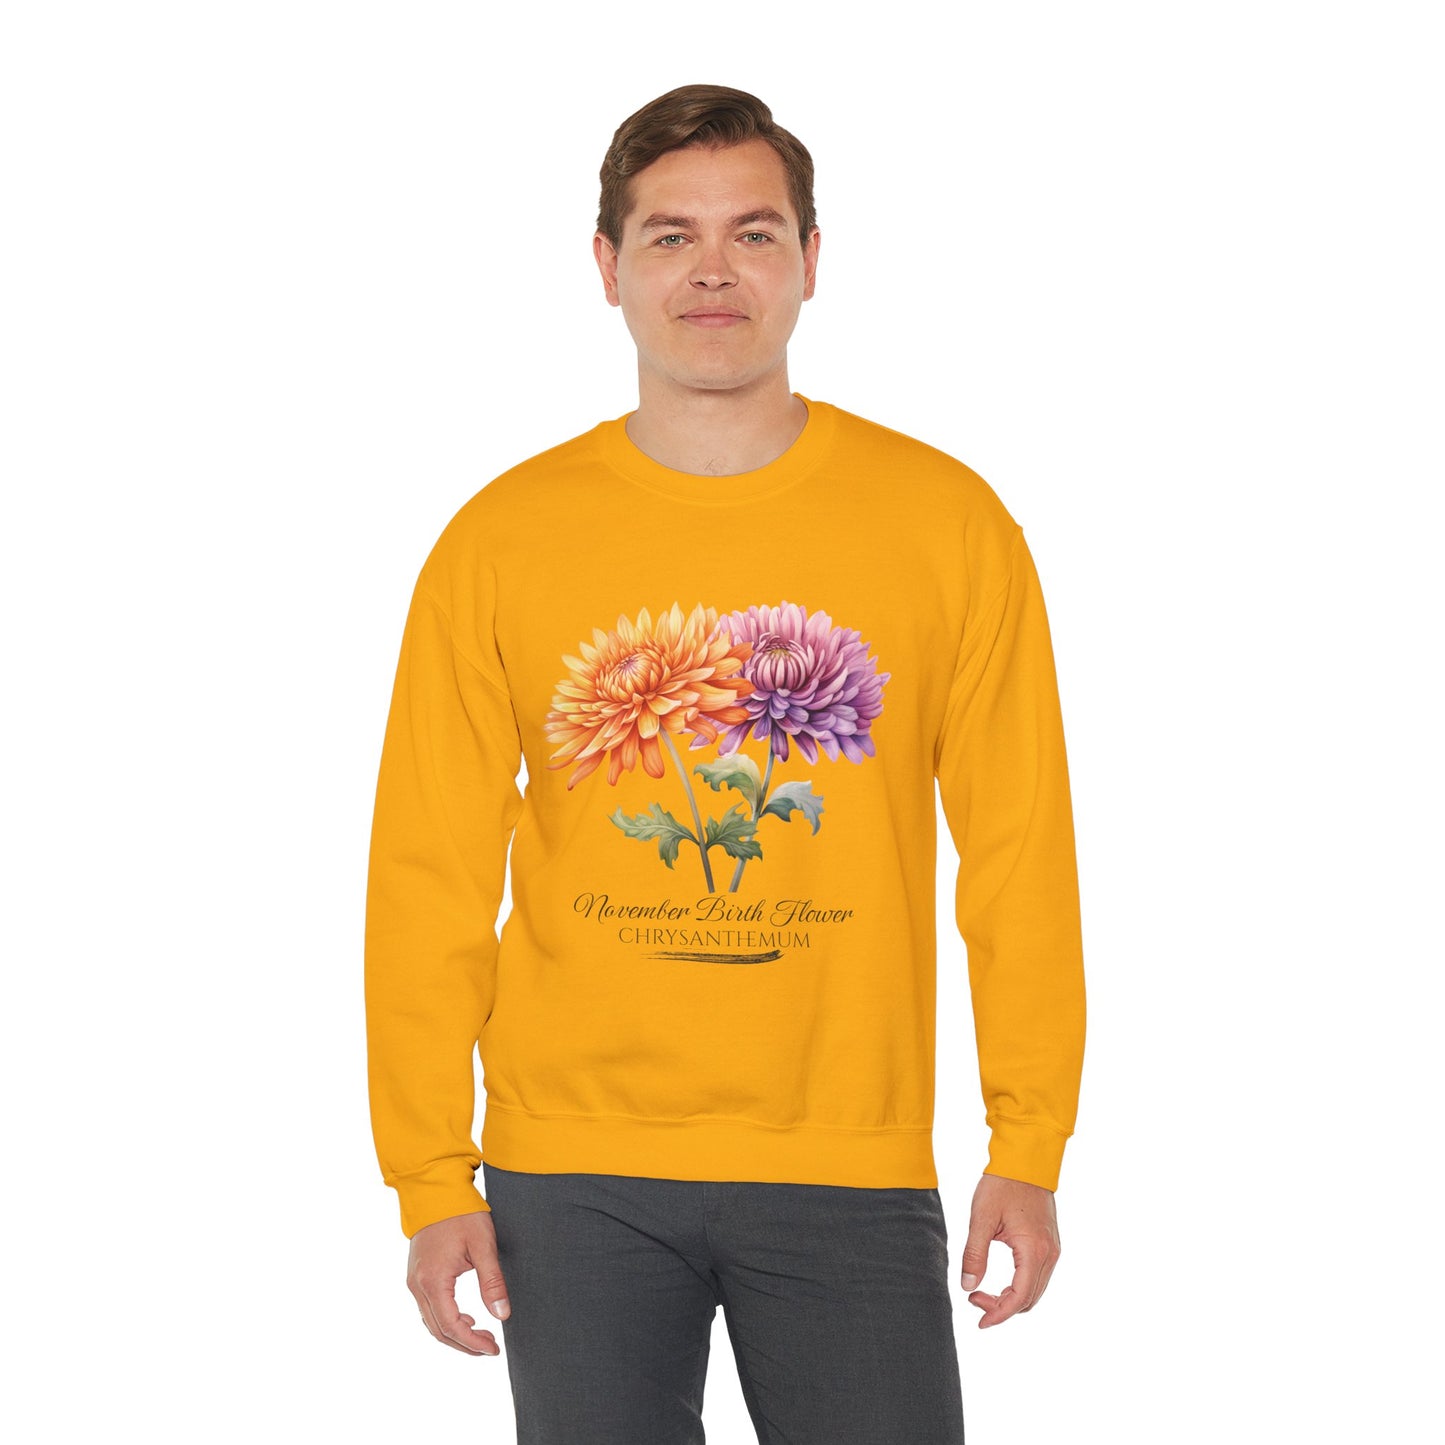 November Birth Flower (Chrysanthemum) - Unisex Heavy Blend™ Crewneck Sweatshirt